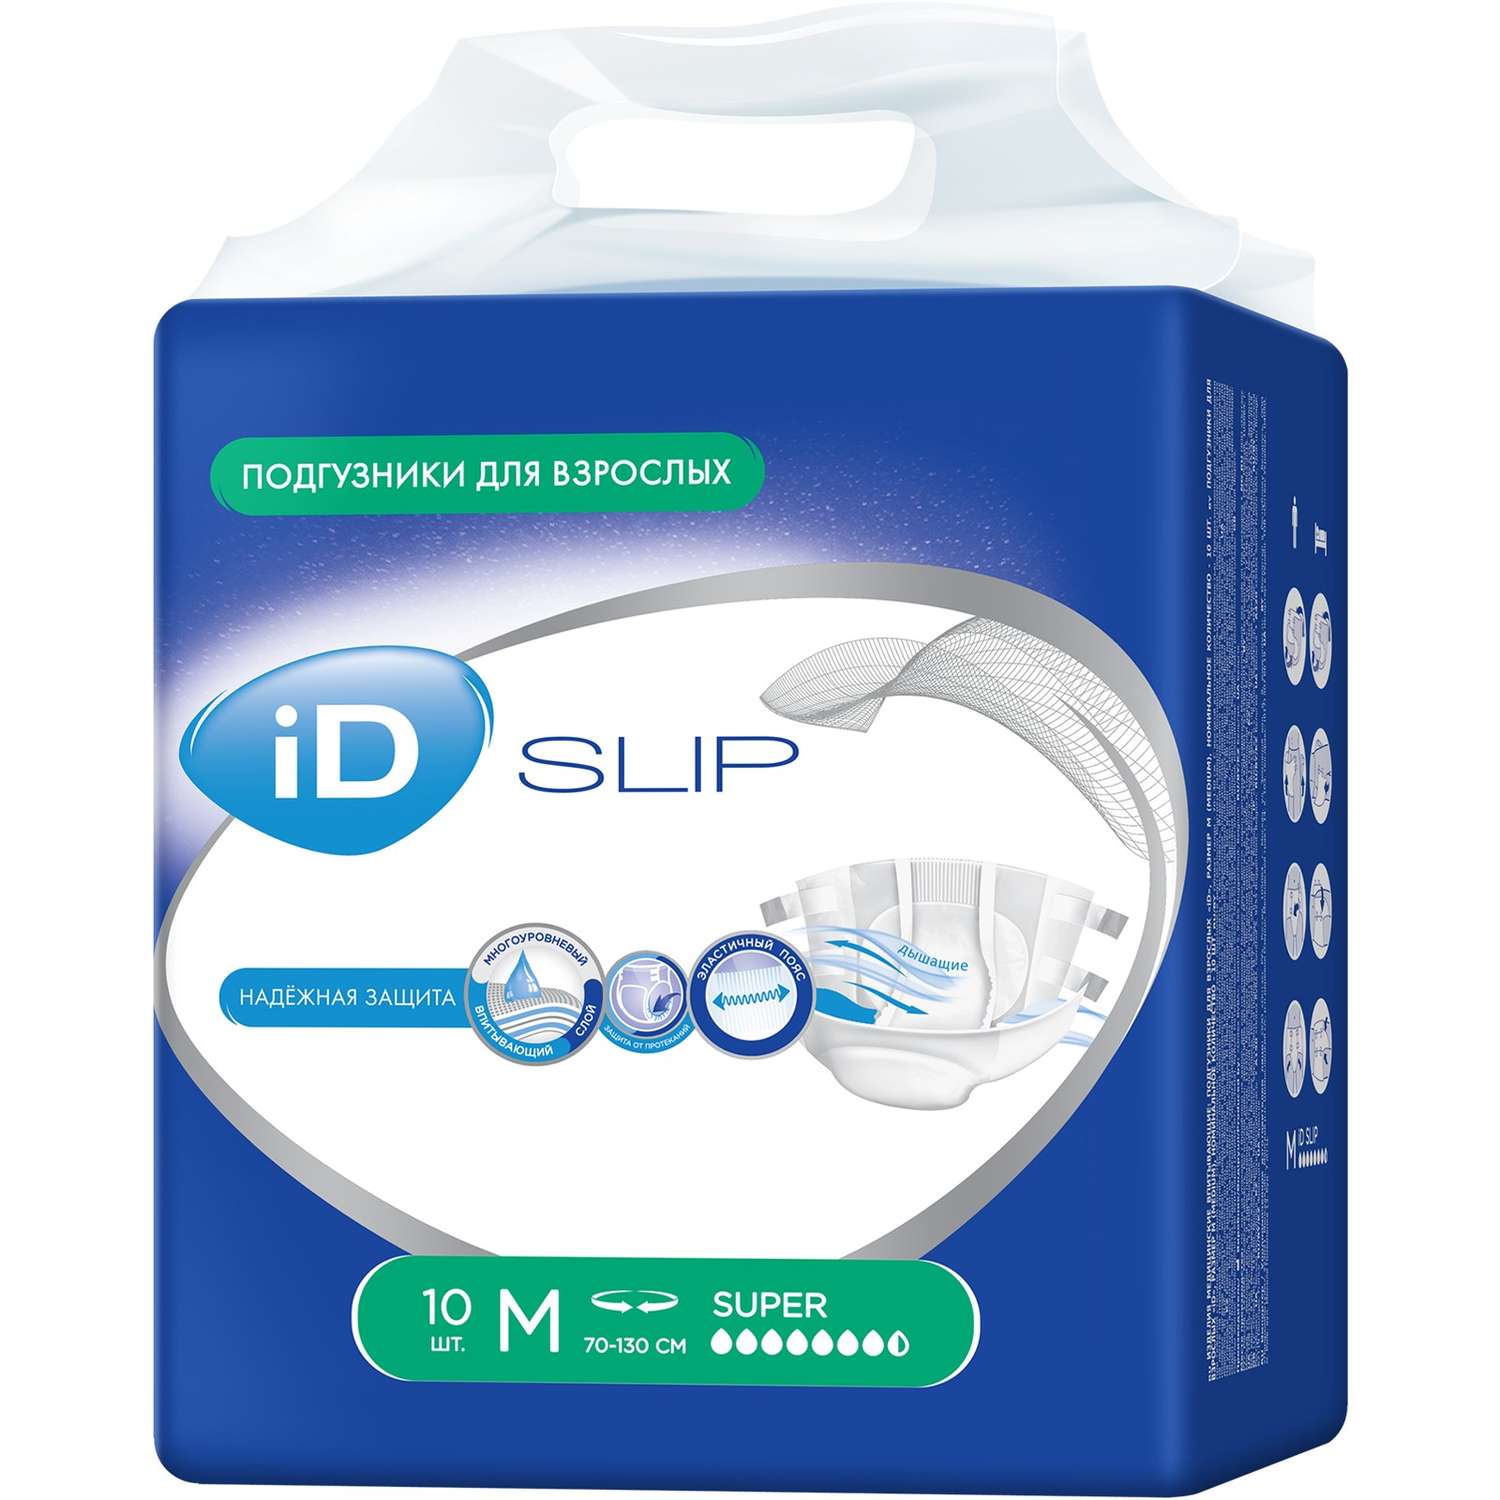 Подгузники для взрослых iD SLIP M 10 шт. - фото 2